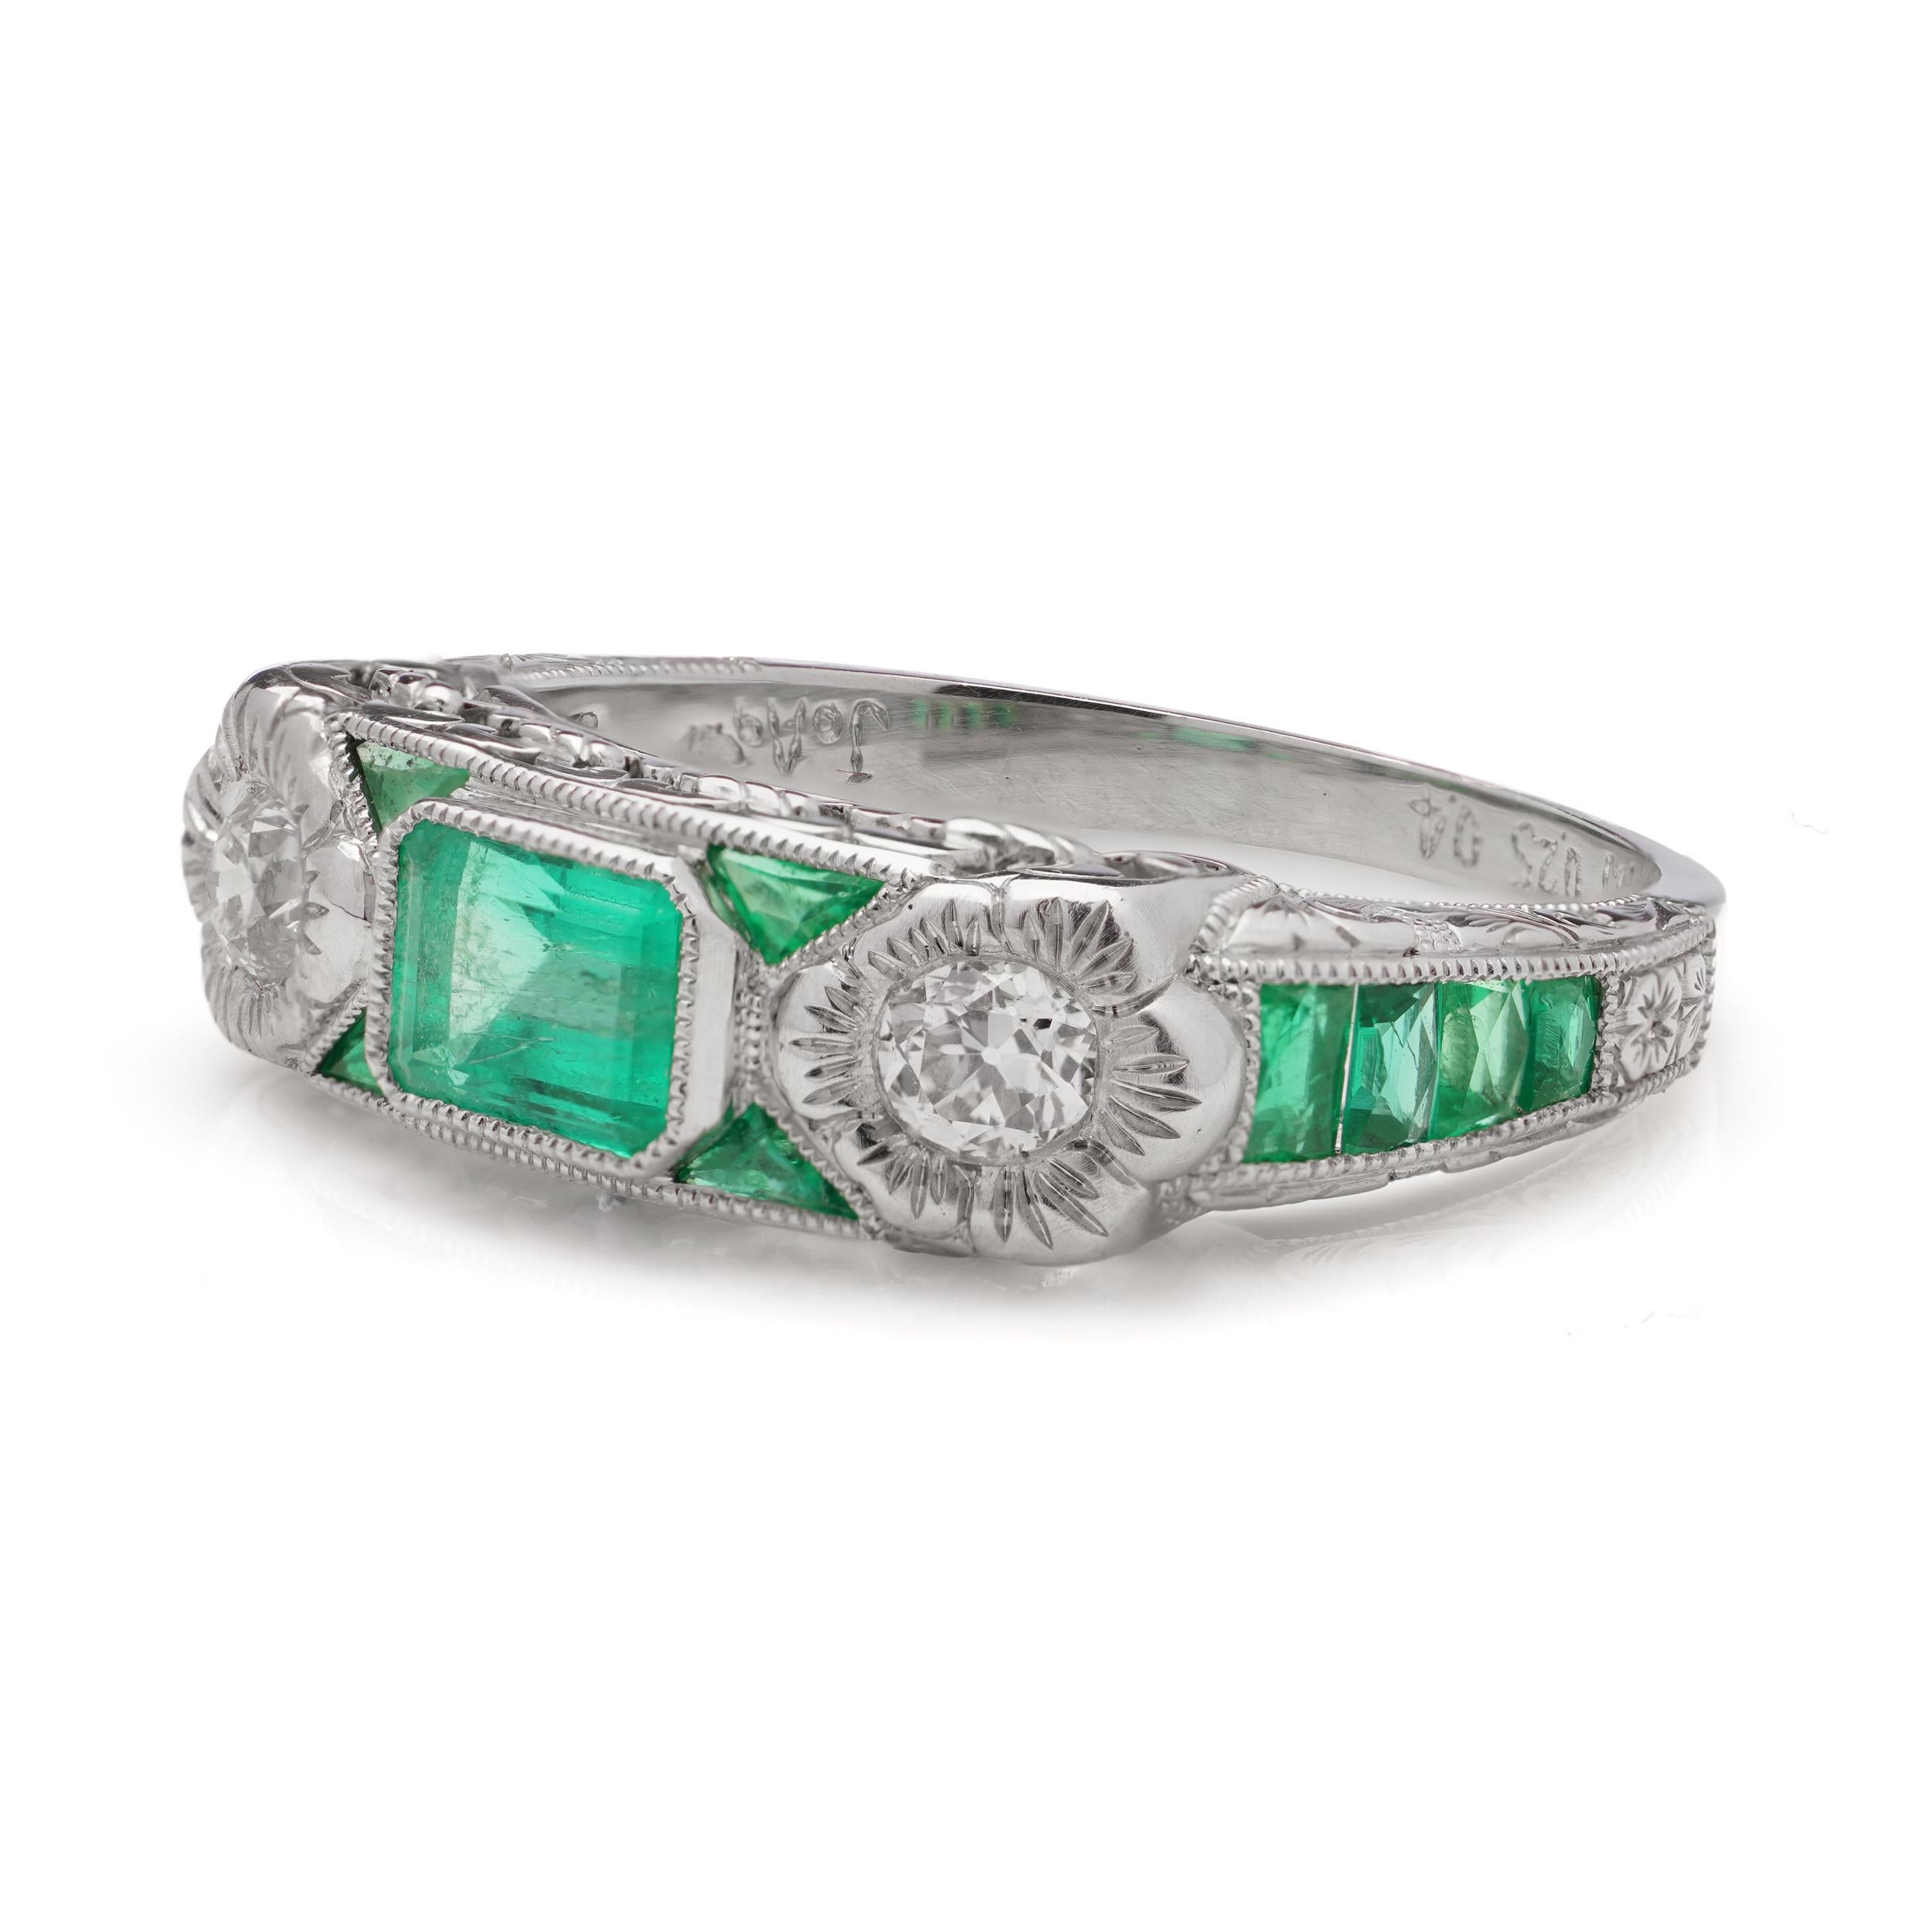 Platinum 0.55 carats of Emerald - cut Emerald ring For Sale 1